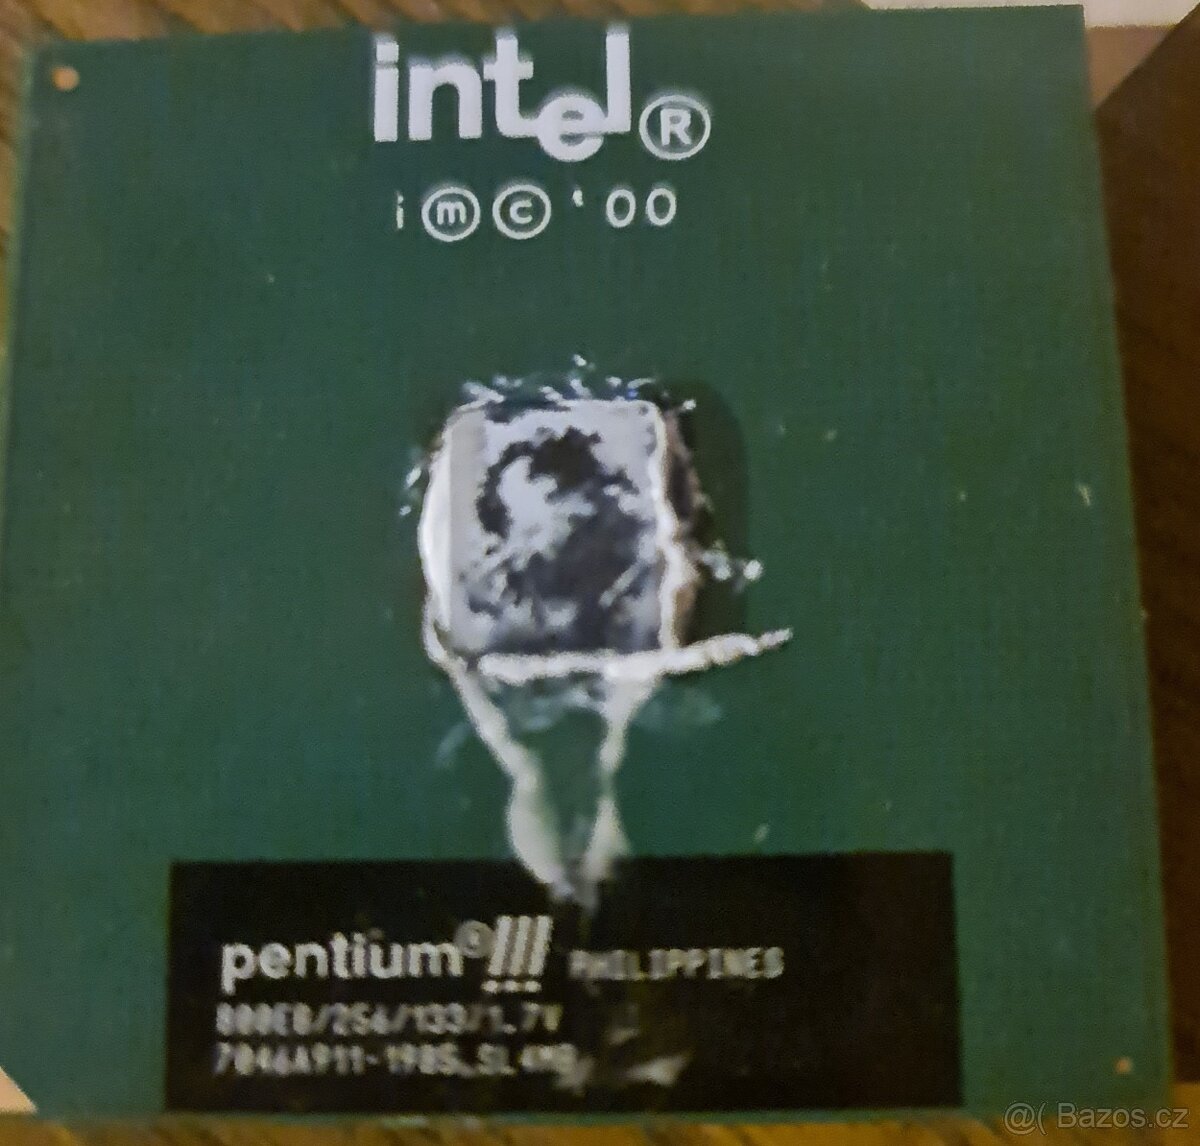 Procesor Intel Pentium III 800Mhz sc.370 + chladič